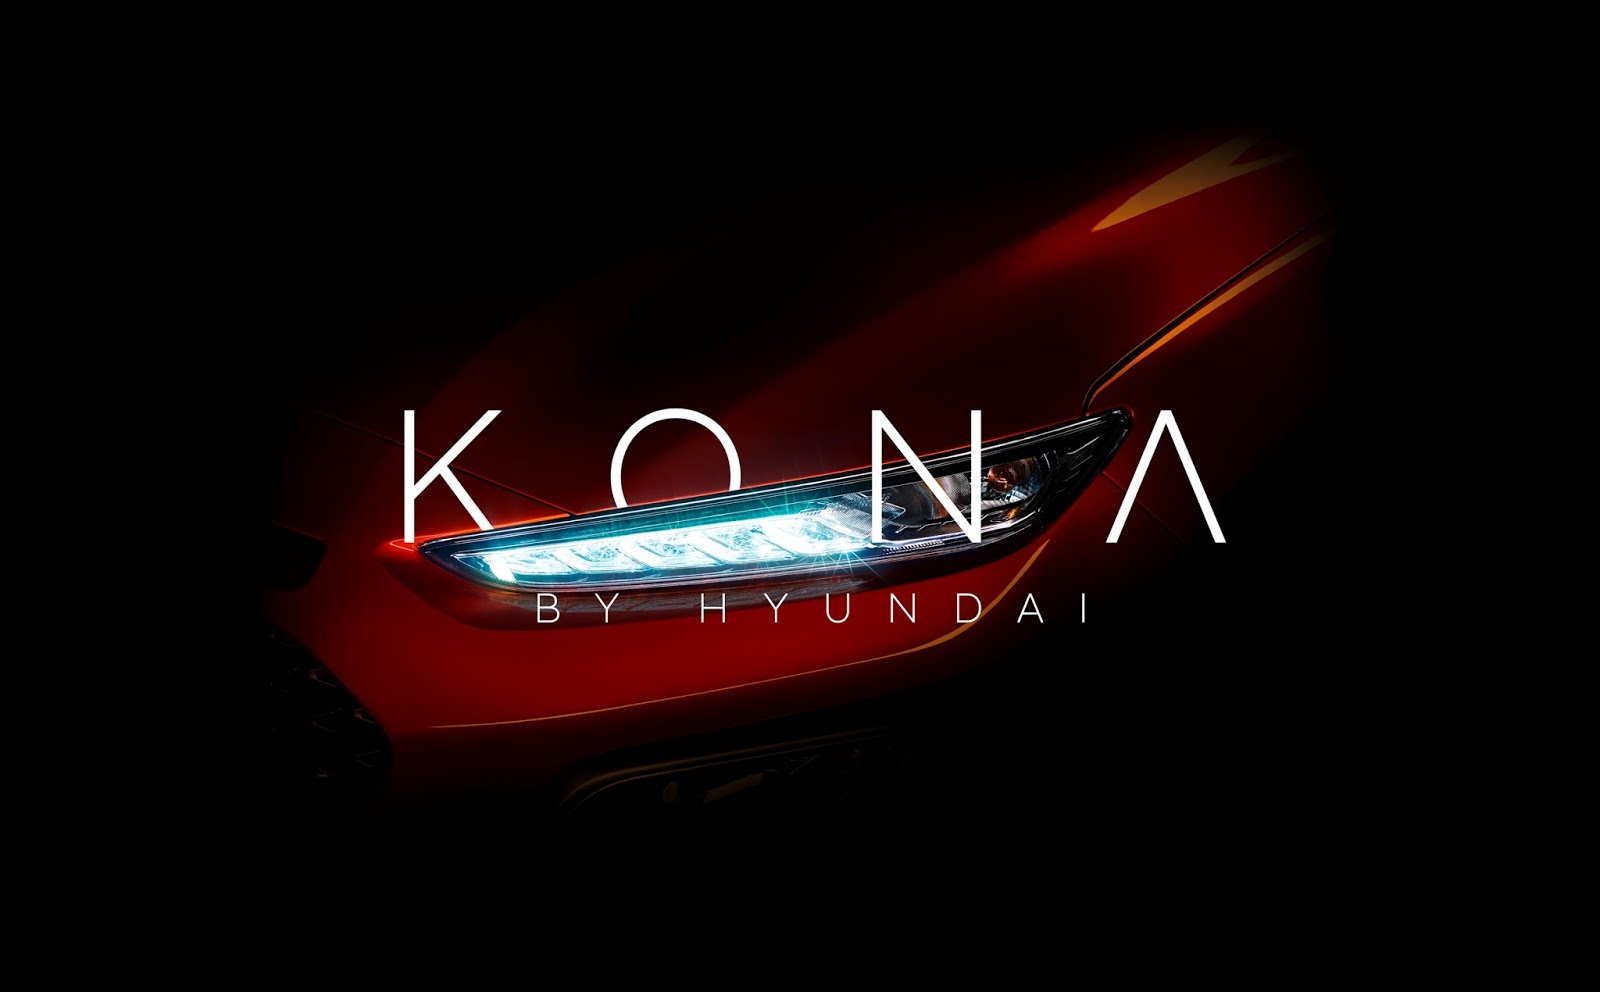 Hyundai Kona Teaser Image Kona θα λέγεται το νέo Compact SUV της Hyundai